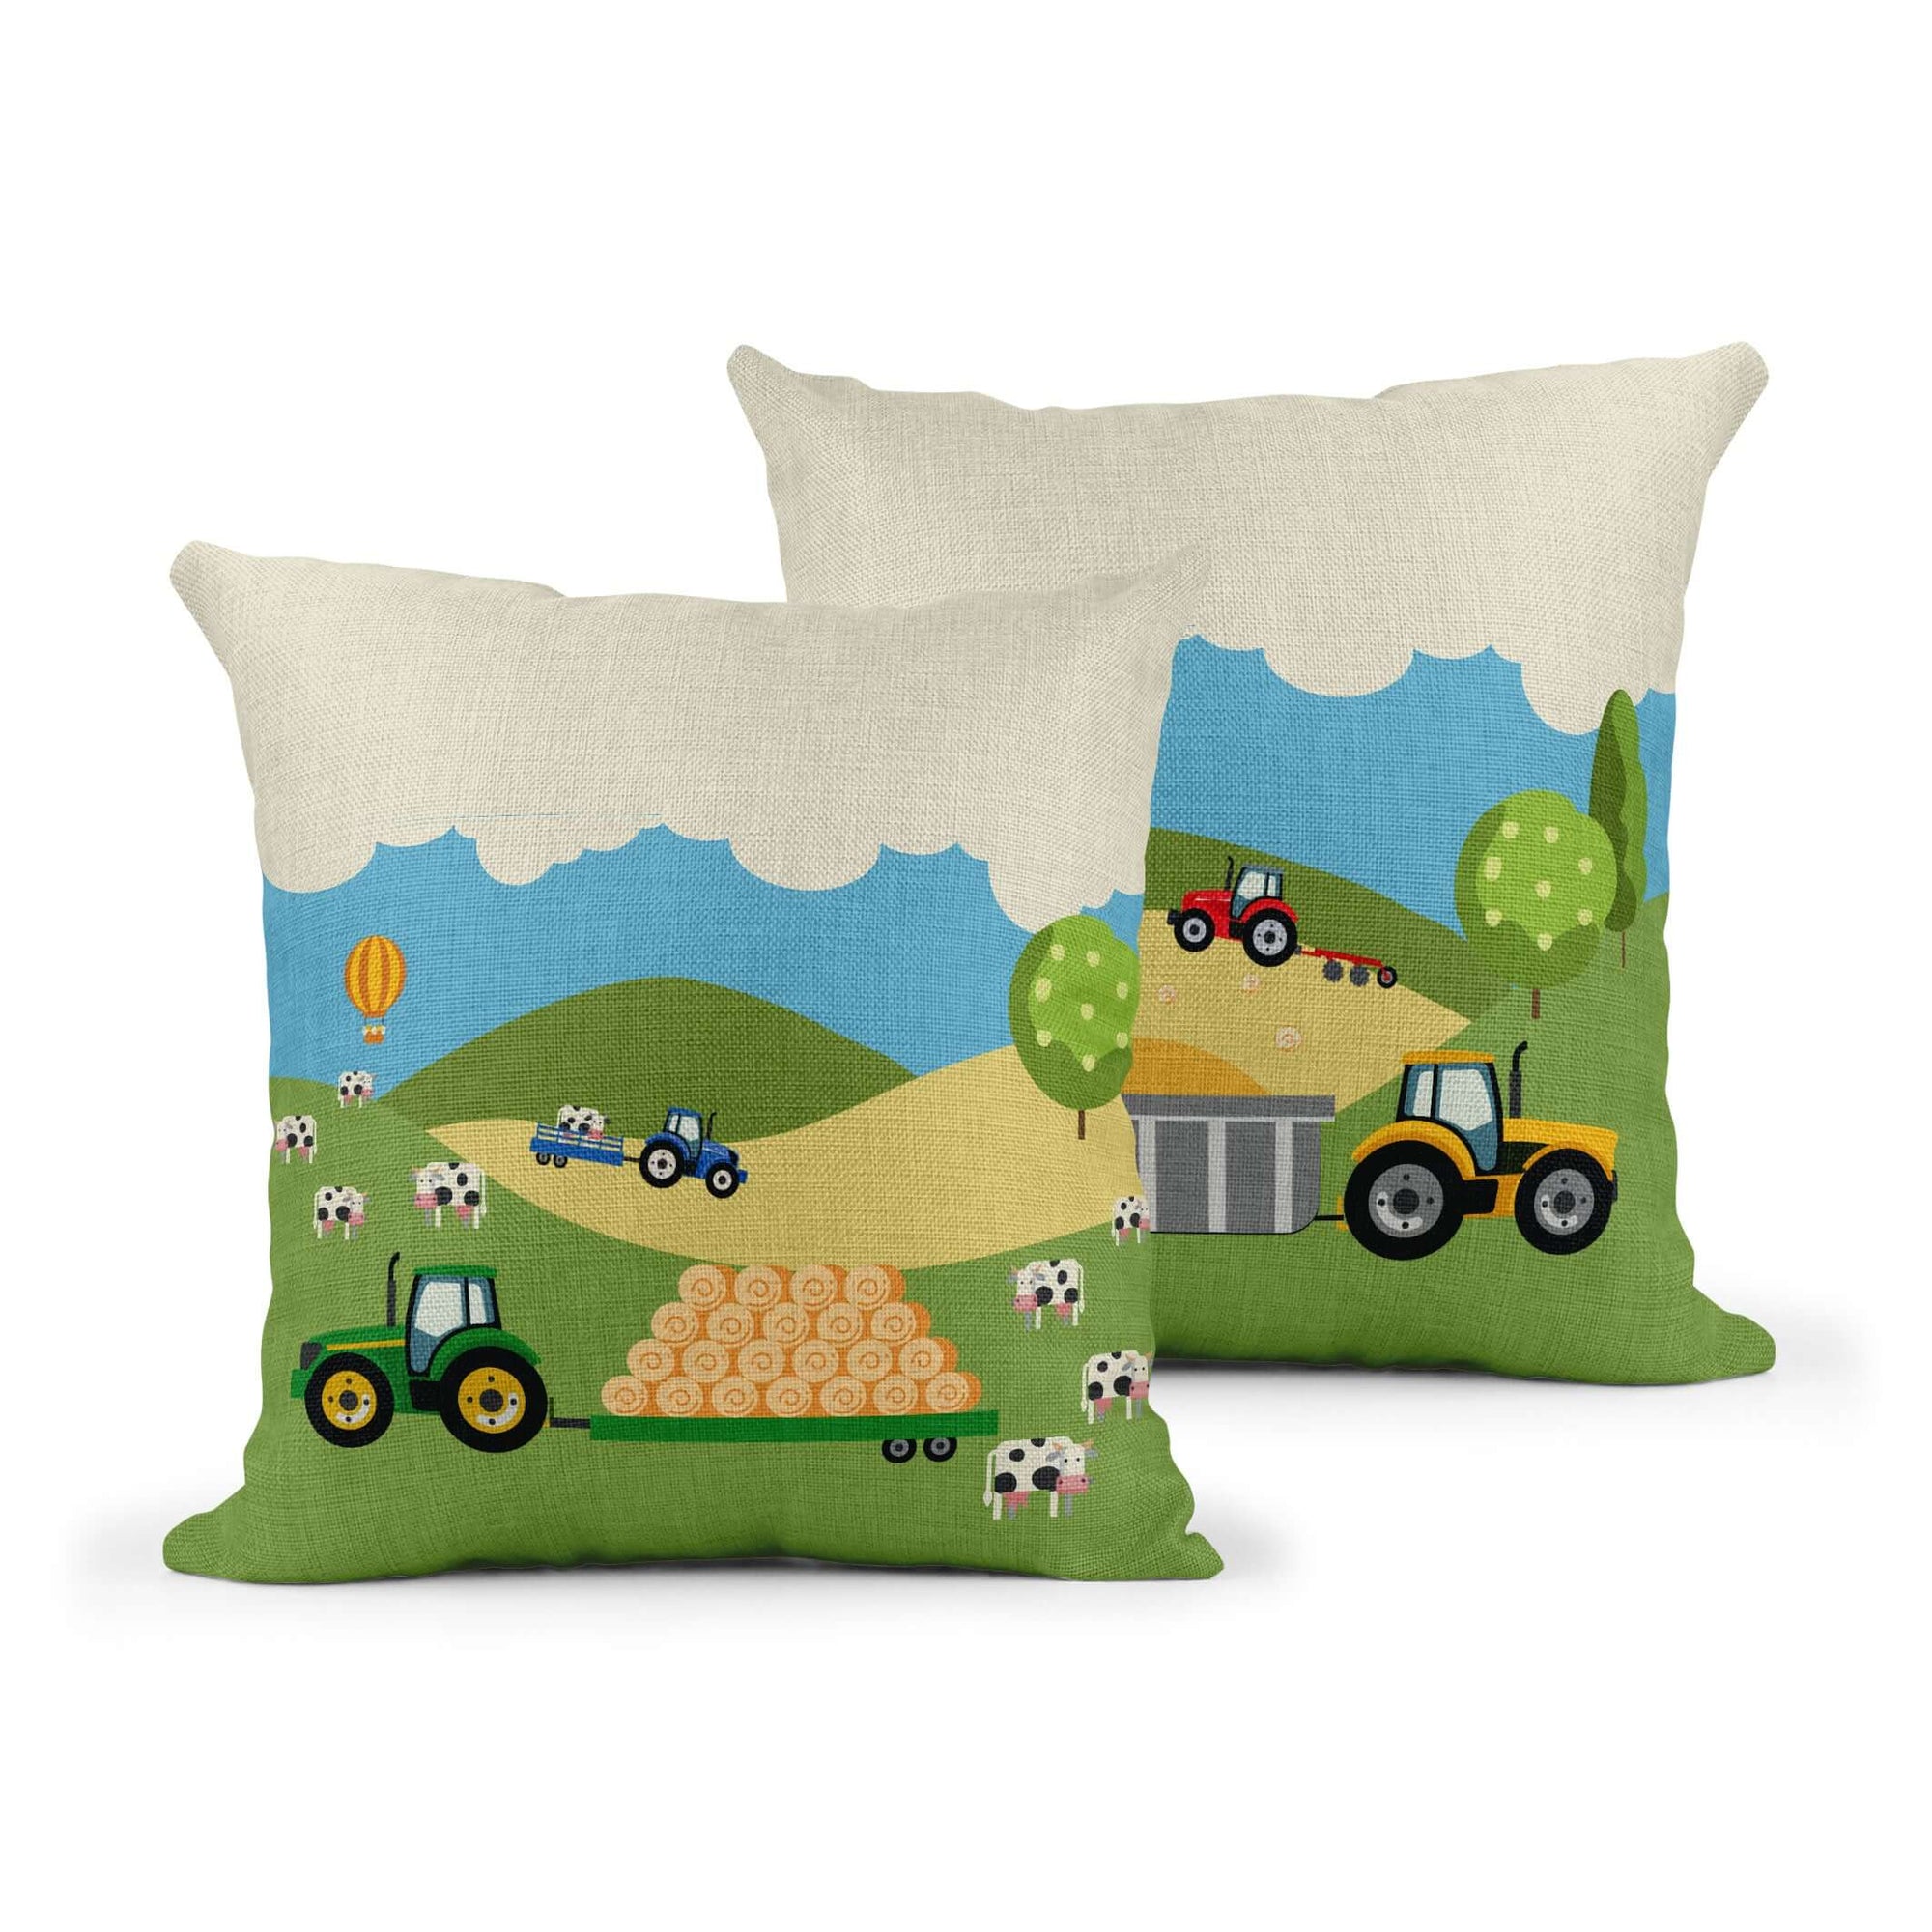 Bramble Hill Farm Cushion Cushions Mustard and Gray Ltd Shropshire UK